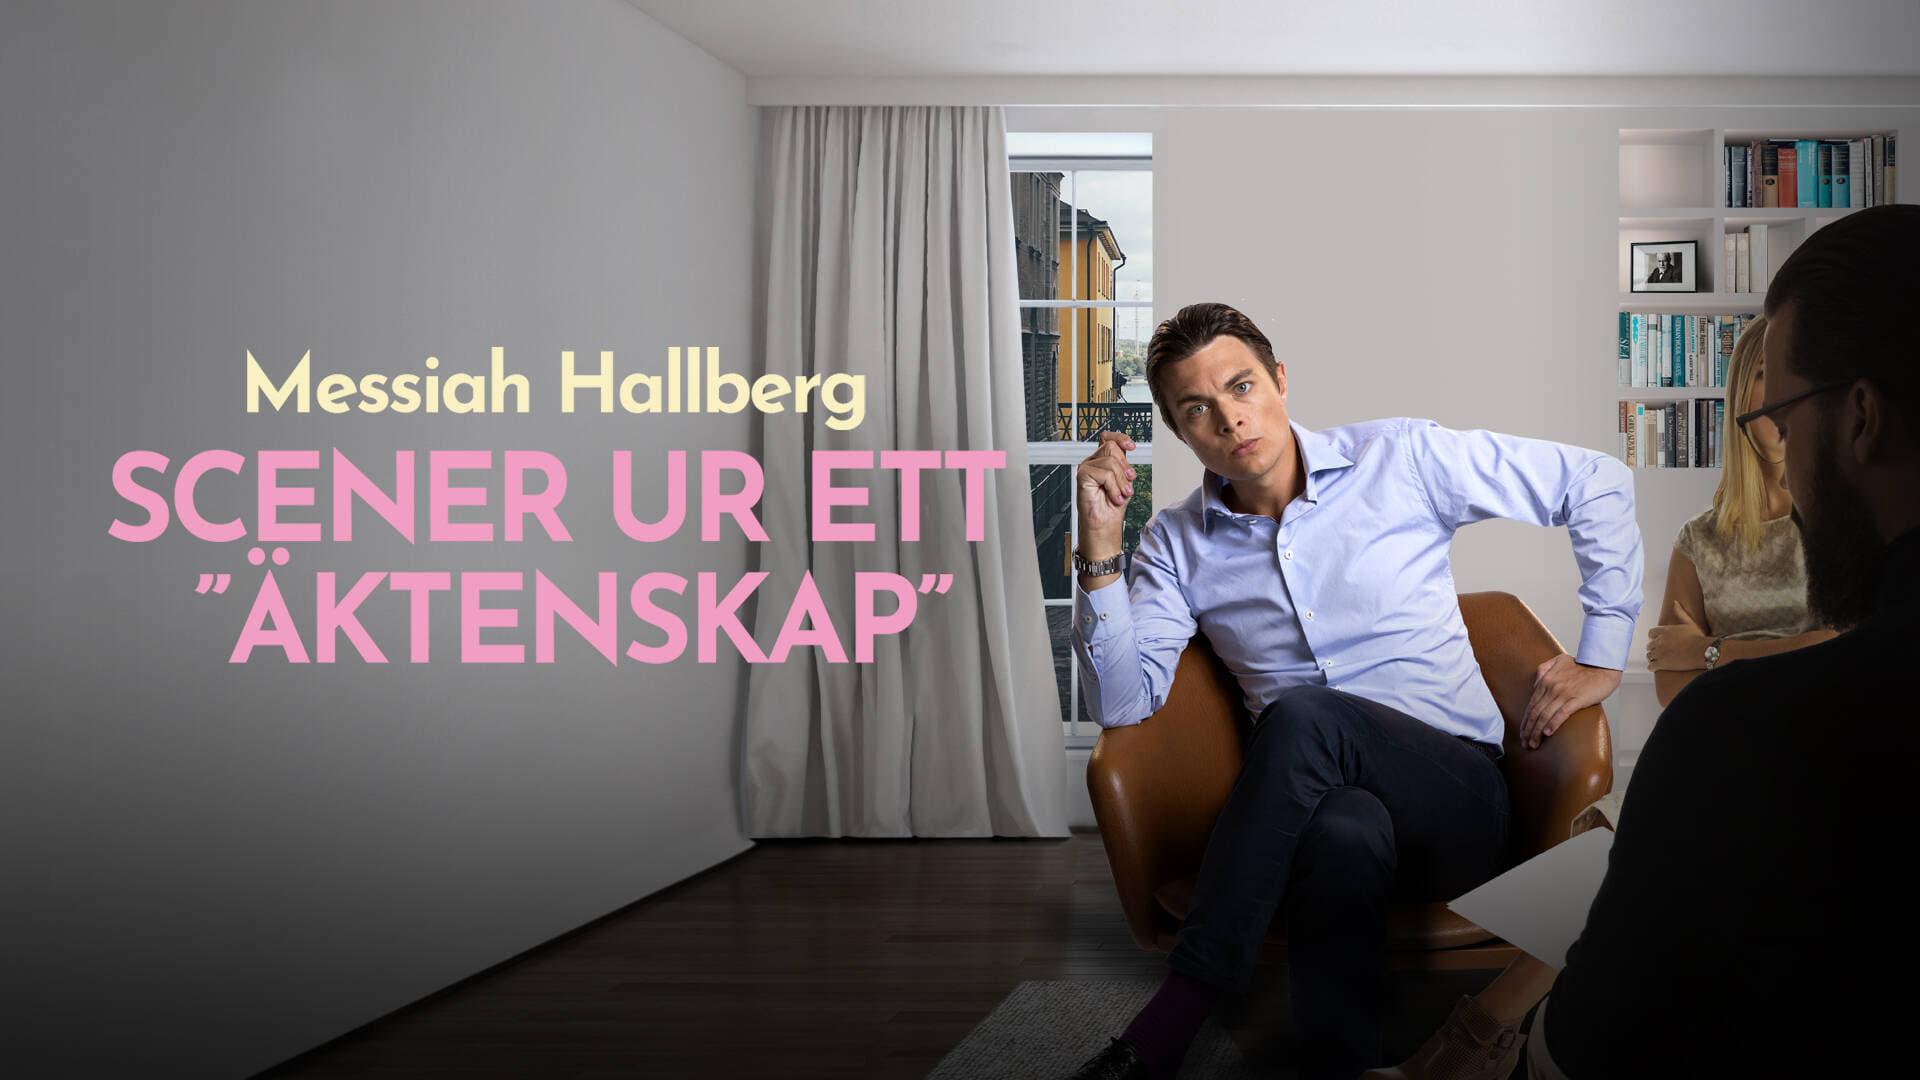 Messiah Hallberg - Scener ur ett "äktenskap" backdrop